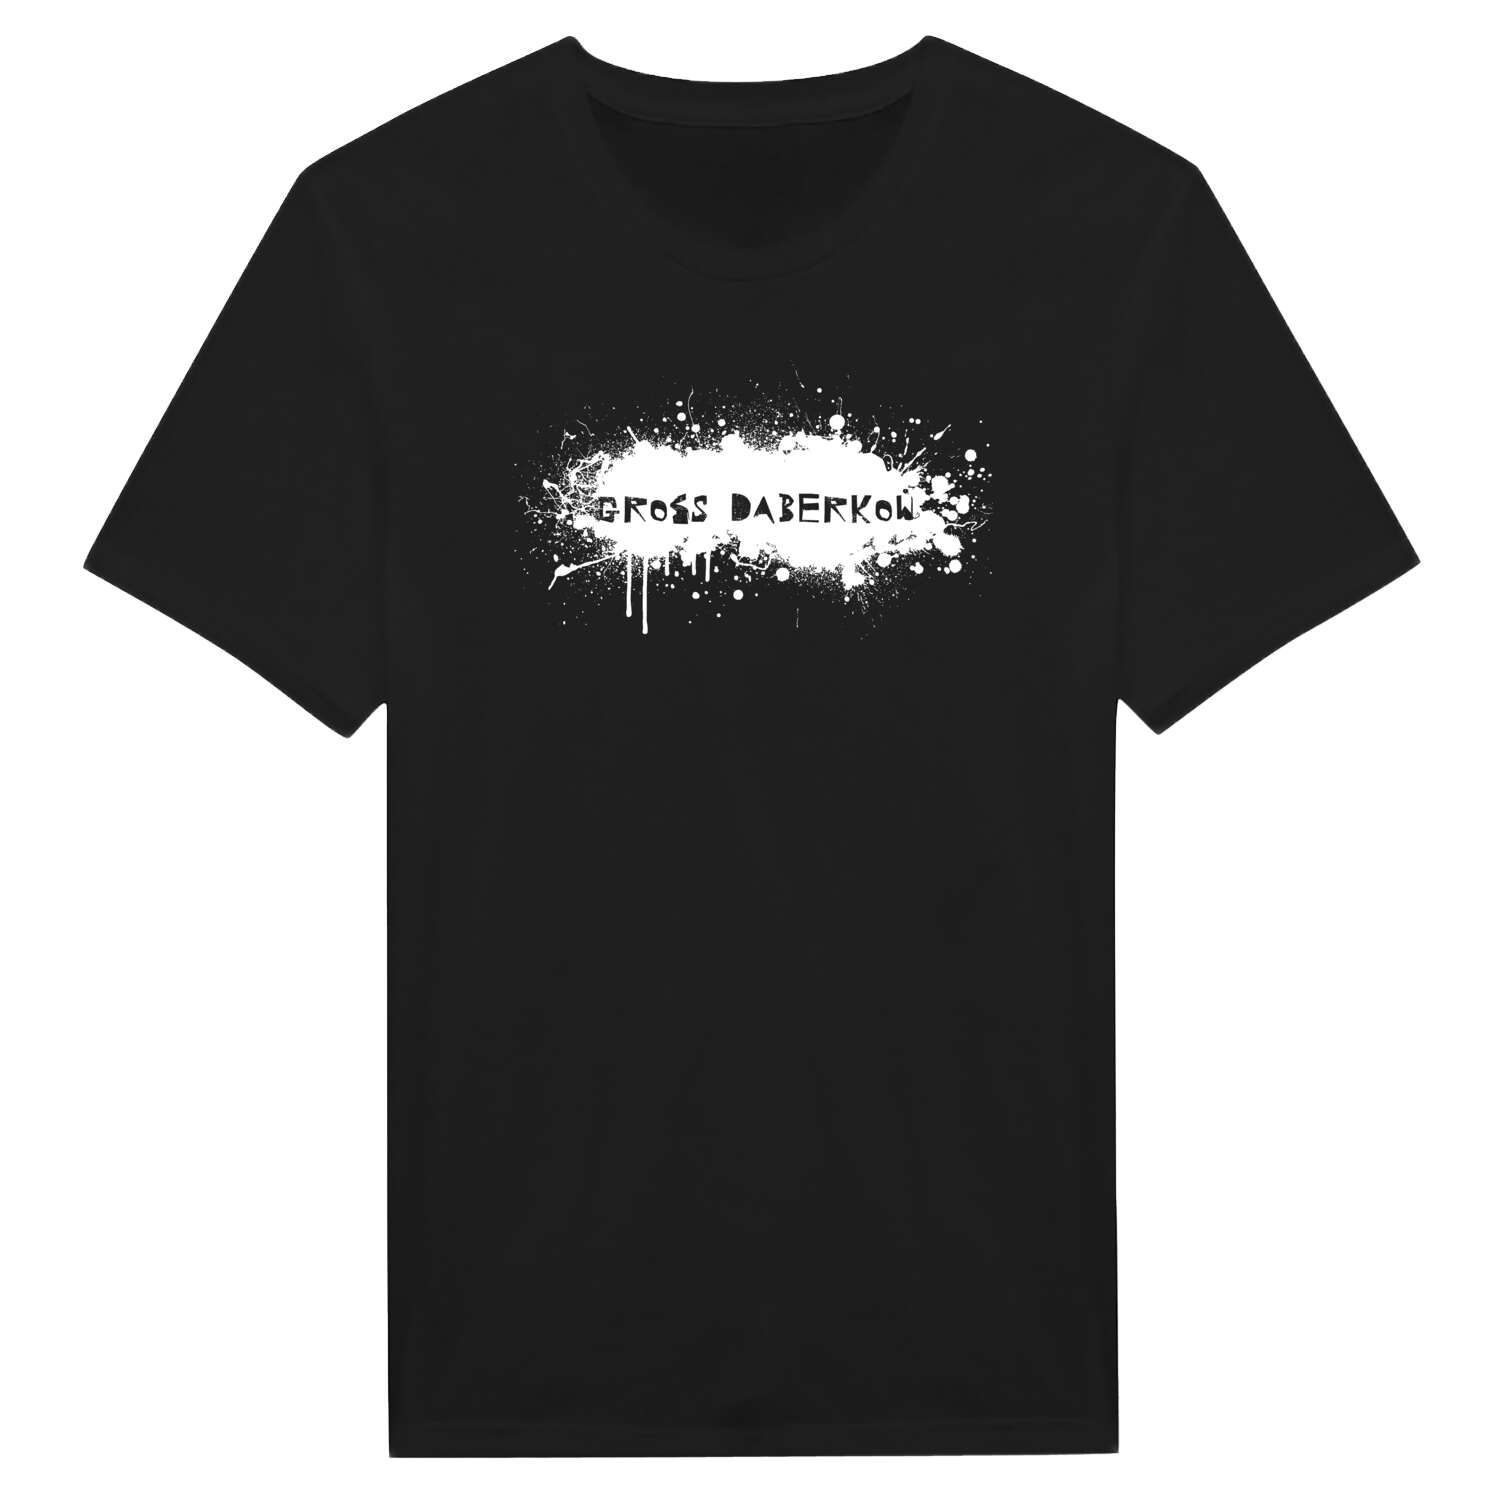 Groß Daberkow T-Shirt »Paint Splash Punk«